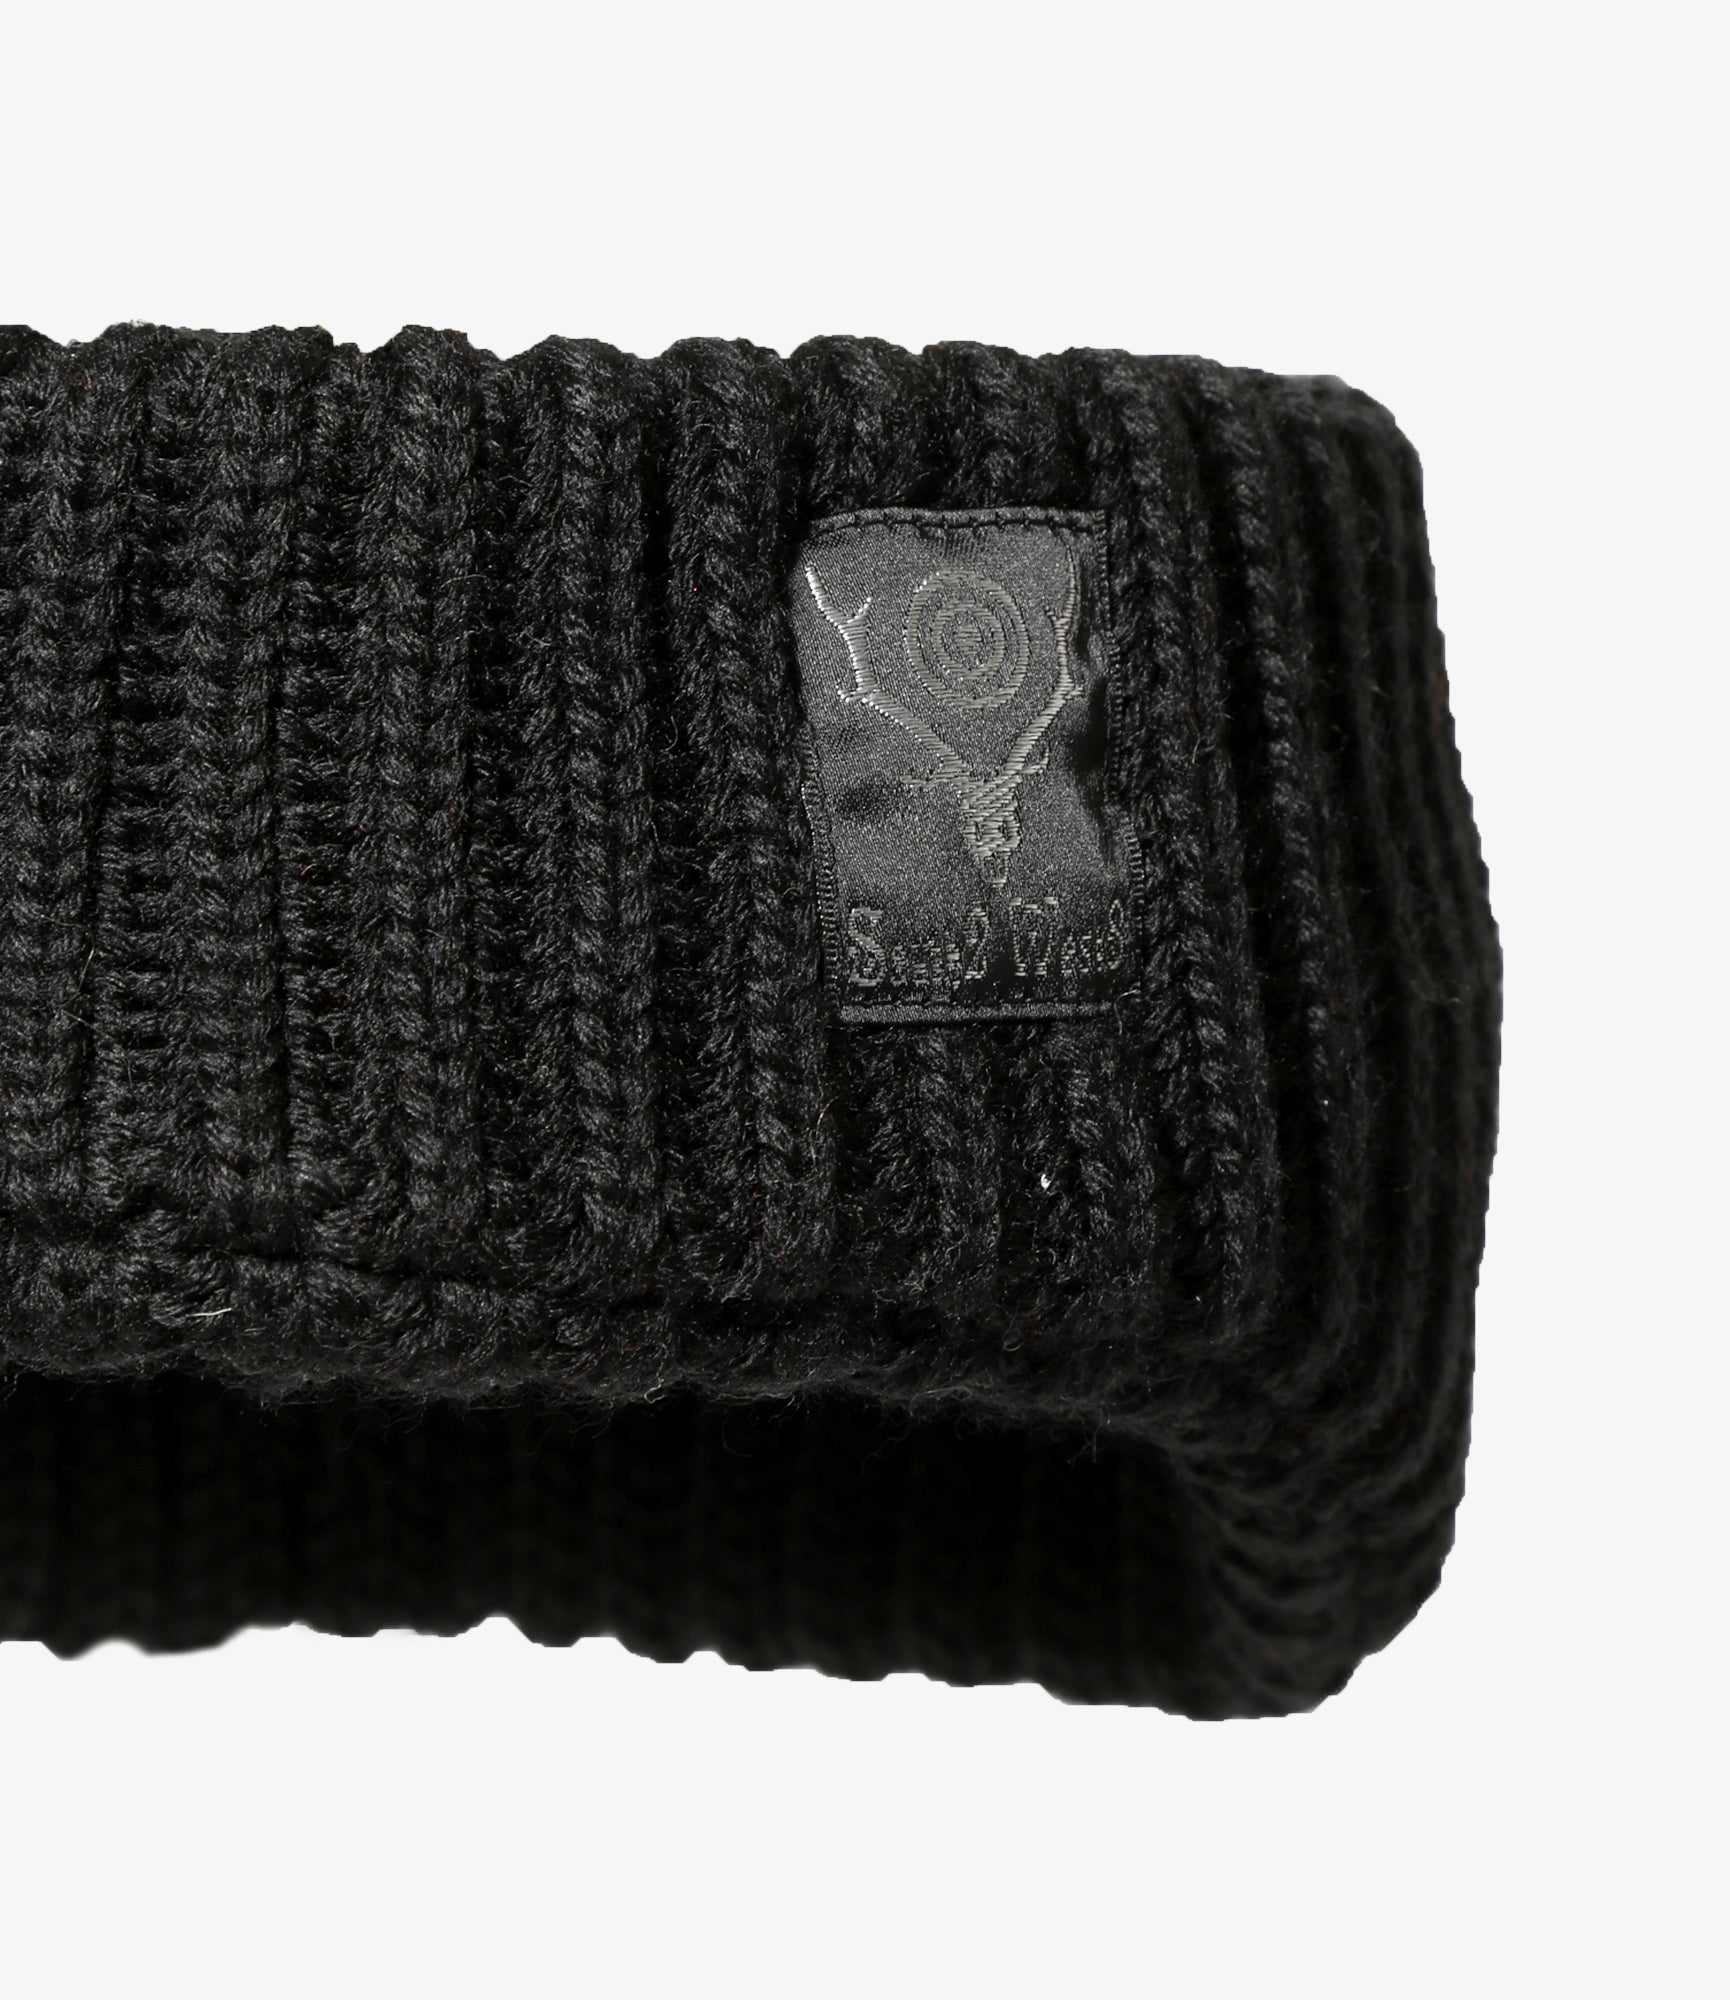 Head Band - Black - W/A Knit